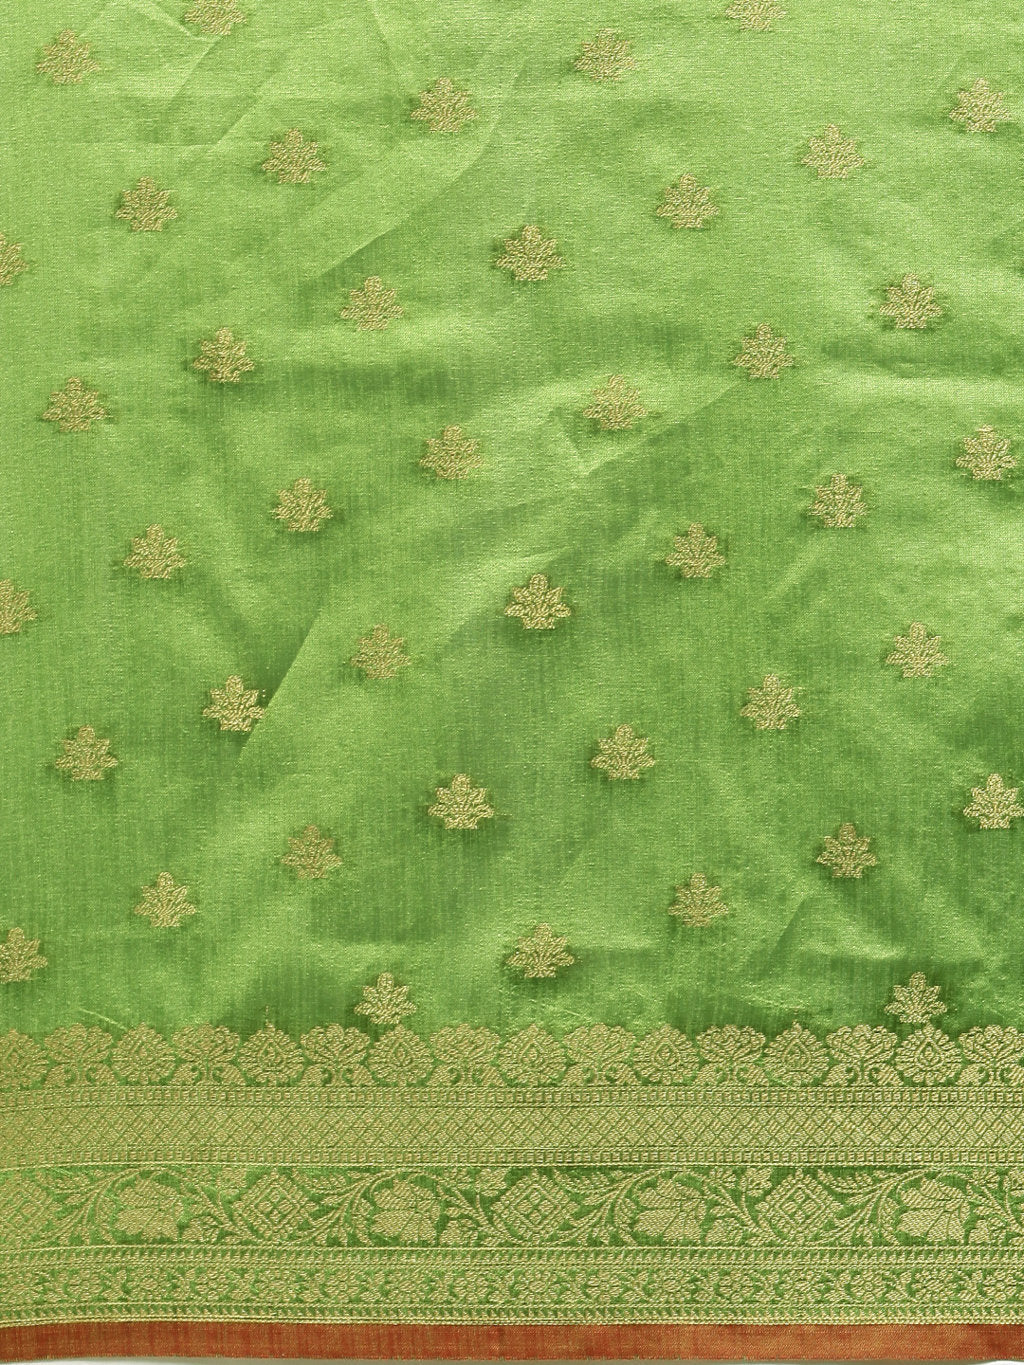 Women's Parrot Green Handloom Silk Jacquard Traditional Saree - Sangam Prints